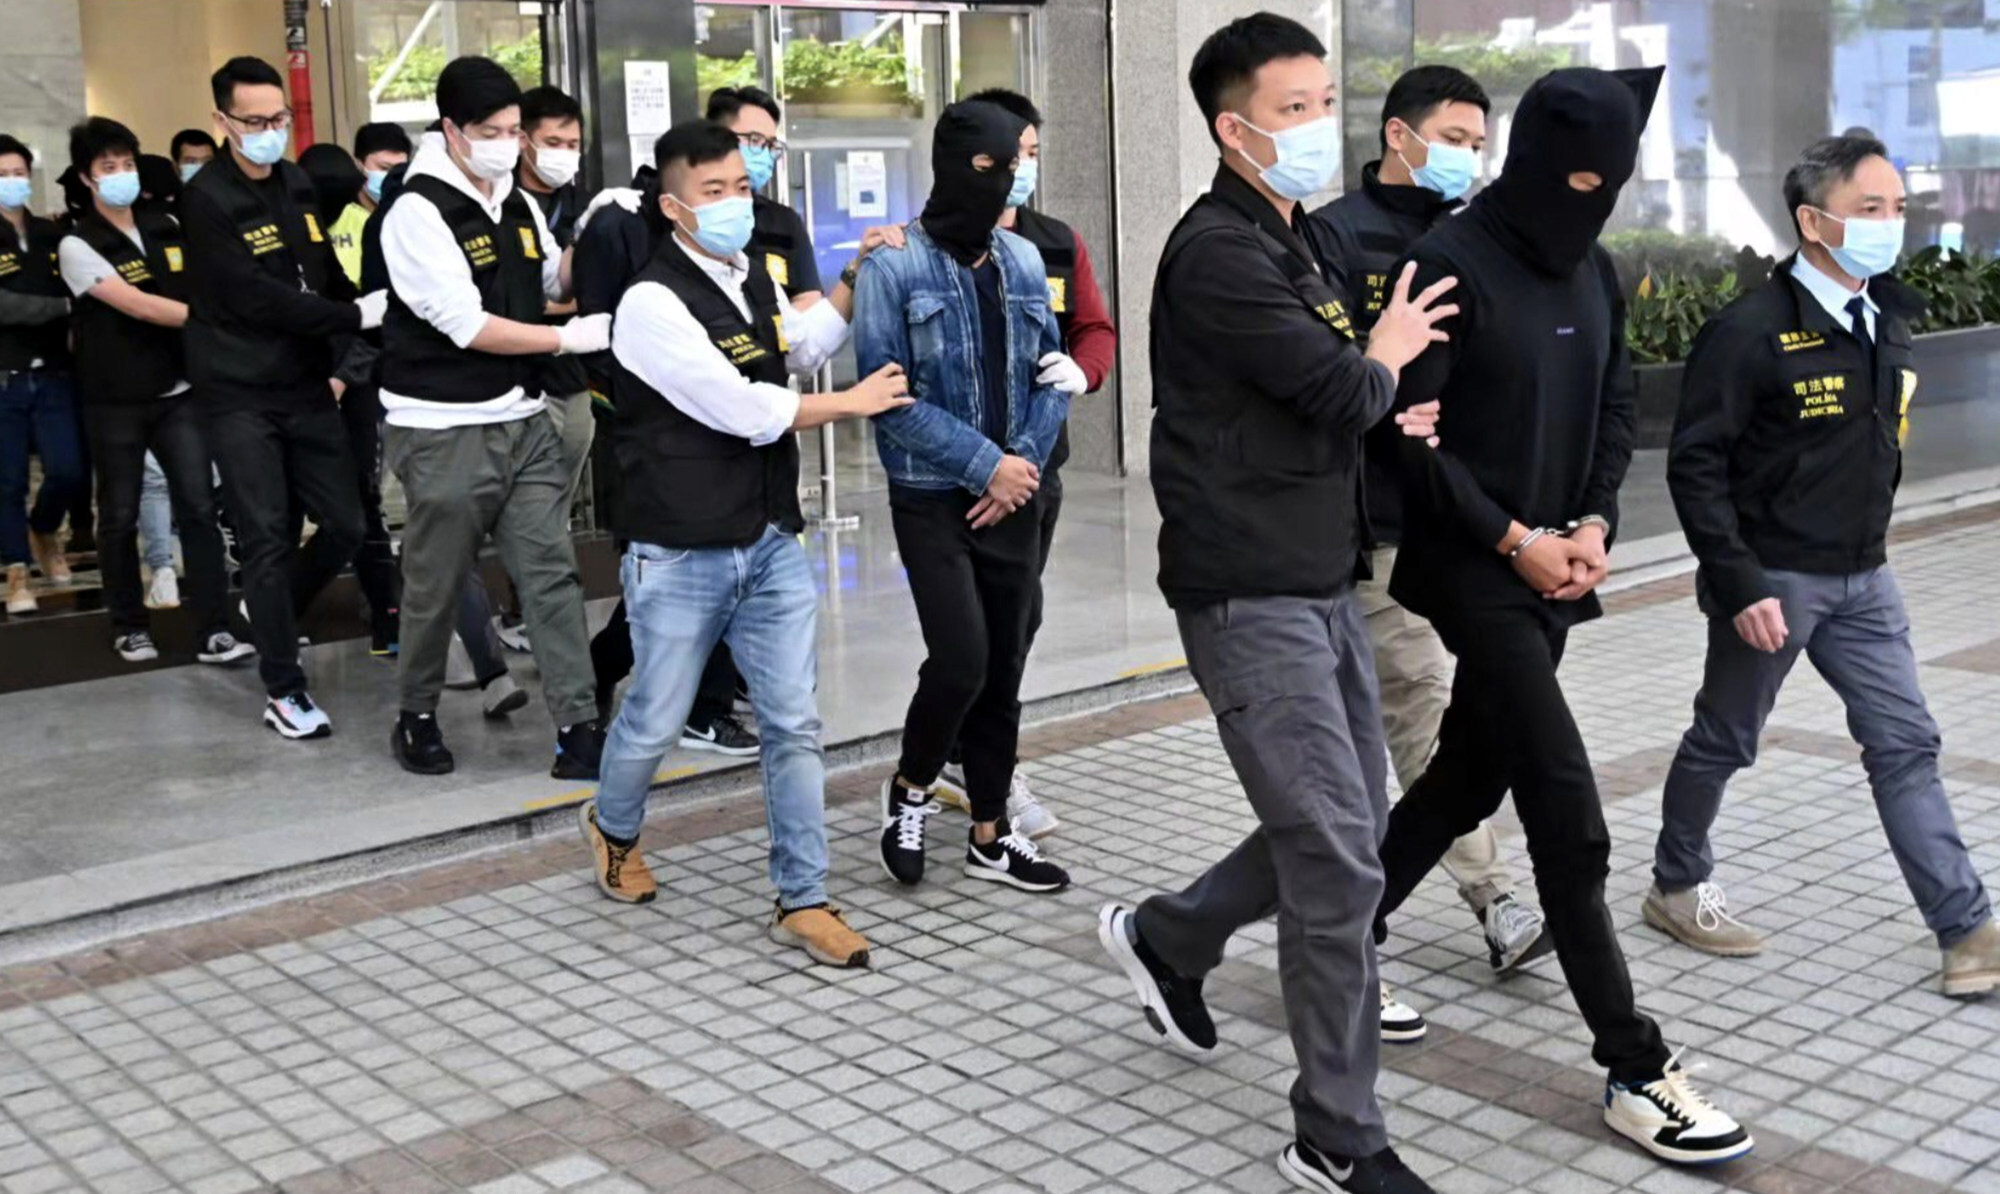 Macau police arrested 11 people in all in last week’s crackdown on allege illegal gambling. Photo: Handout